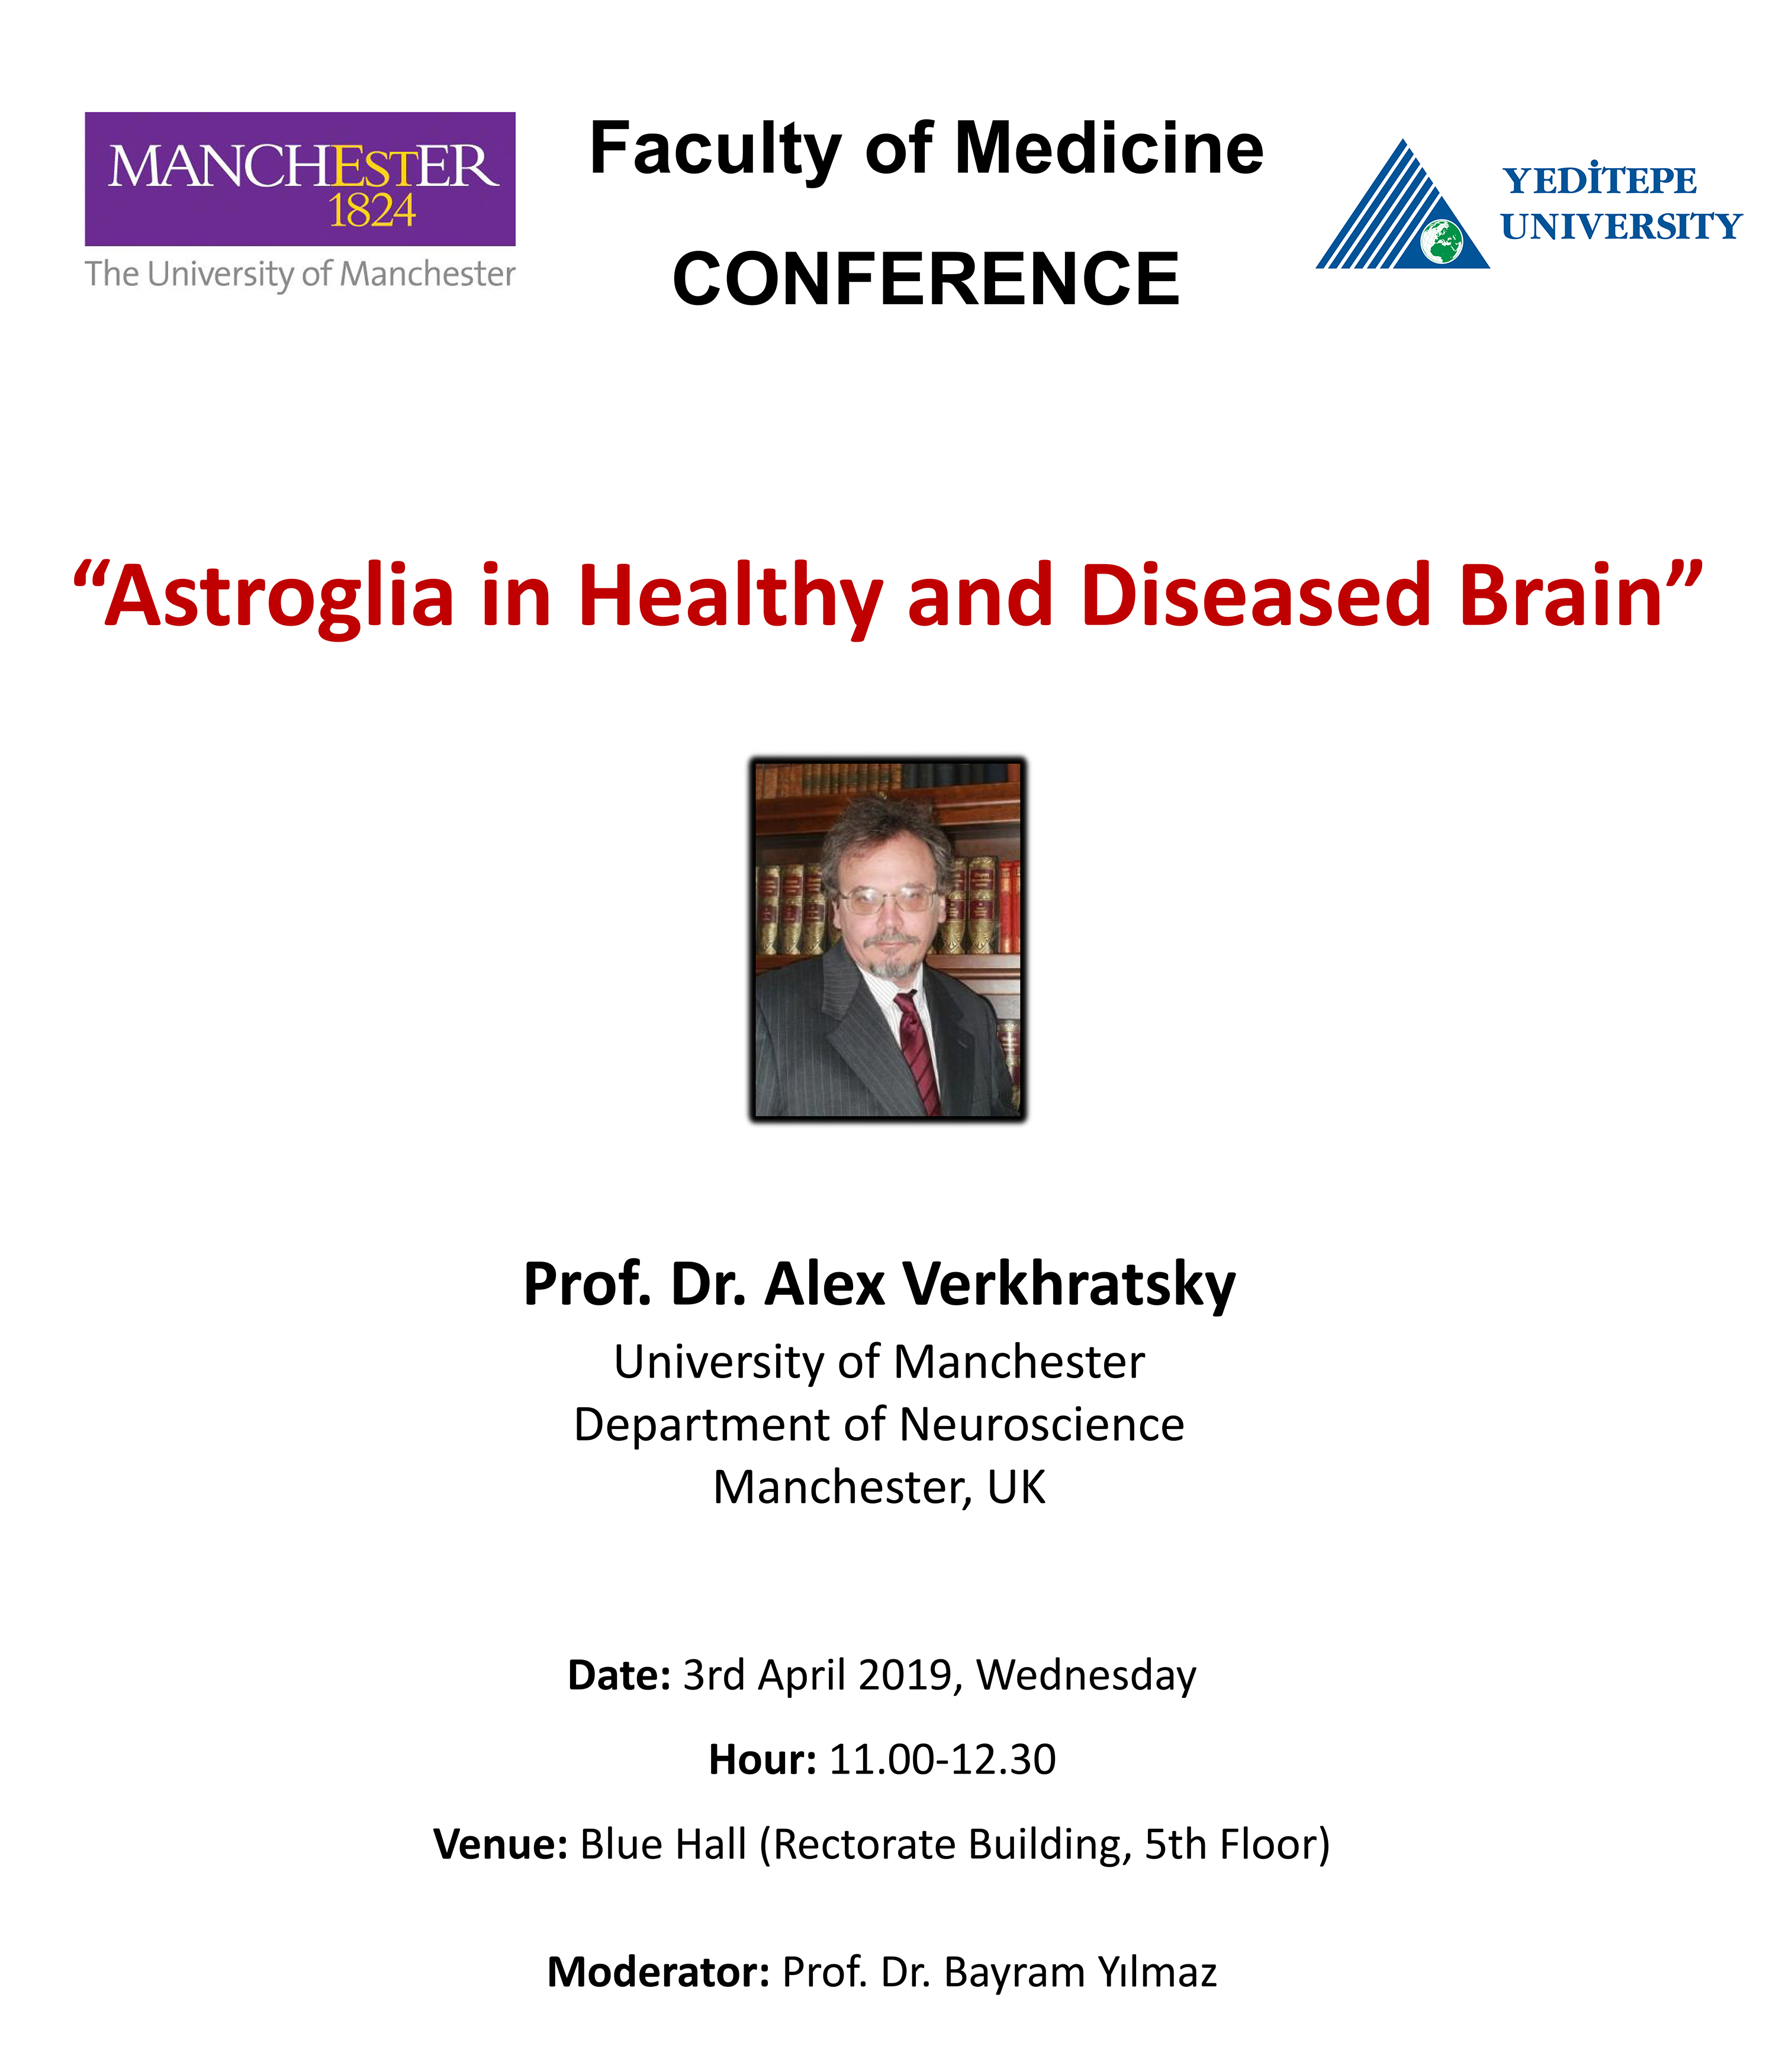 Astroglia in Healthy and Diseased Brain